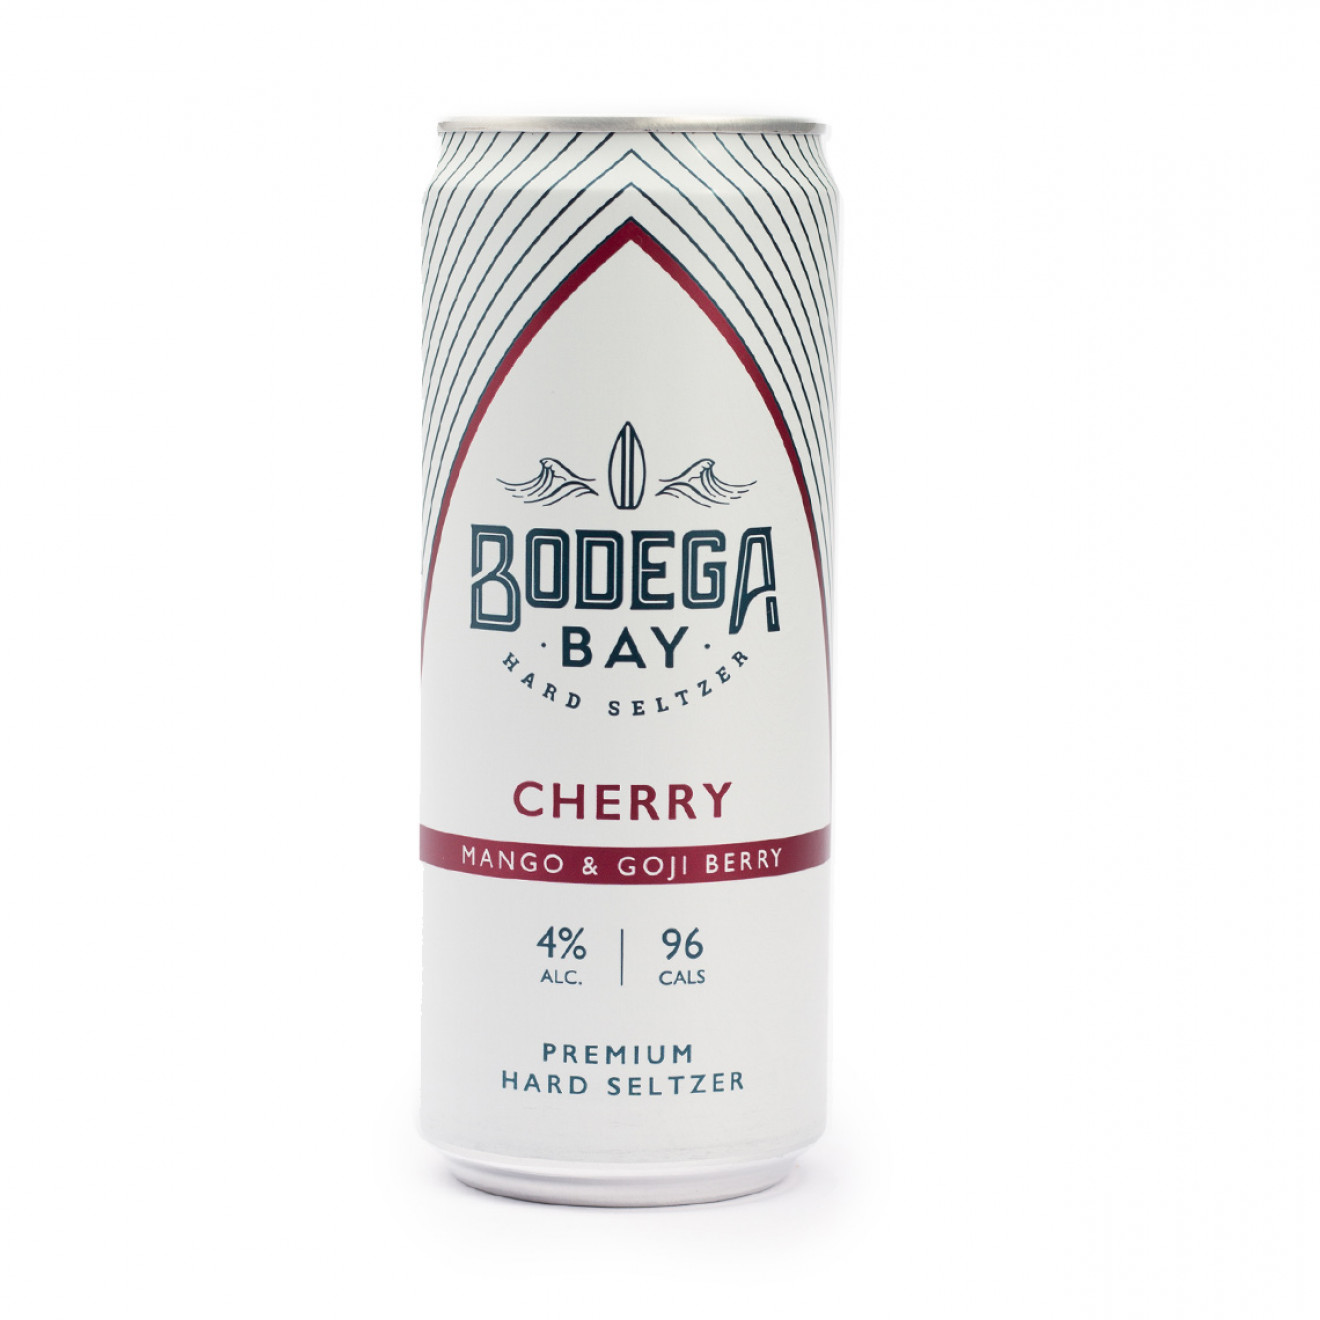 Bodega Bay - Cherry, Mango & Goji Berry - 250ml